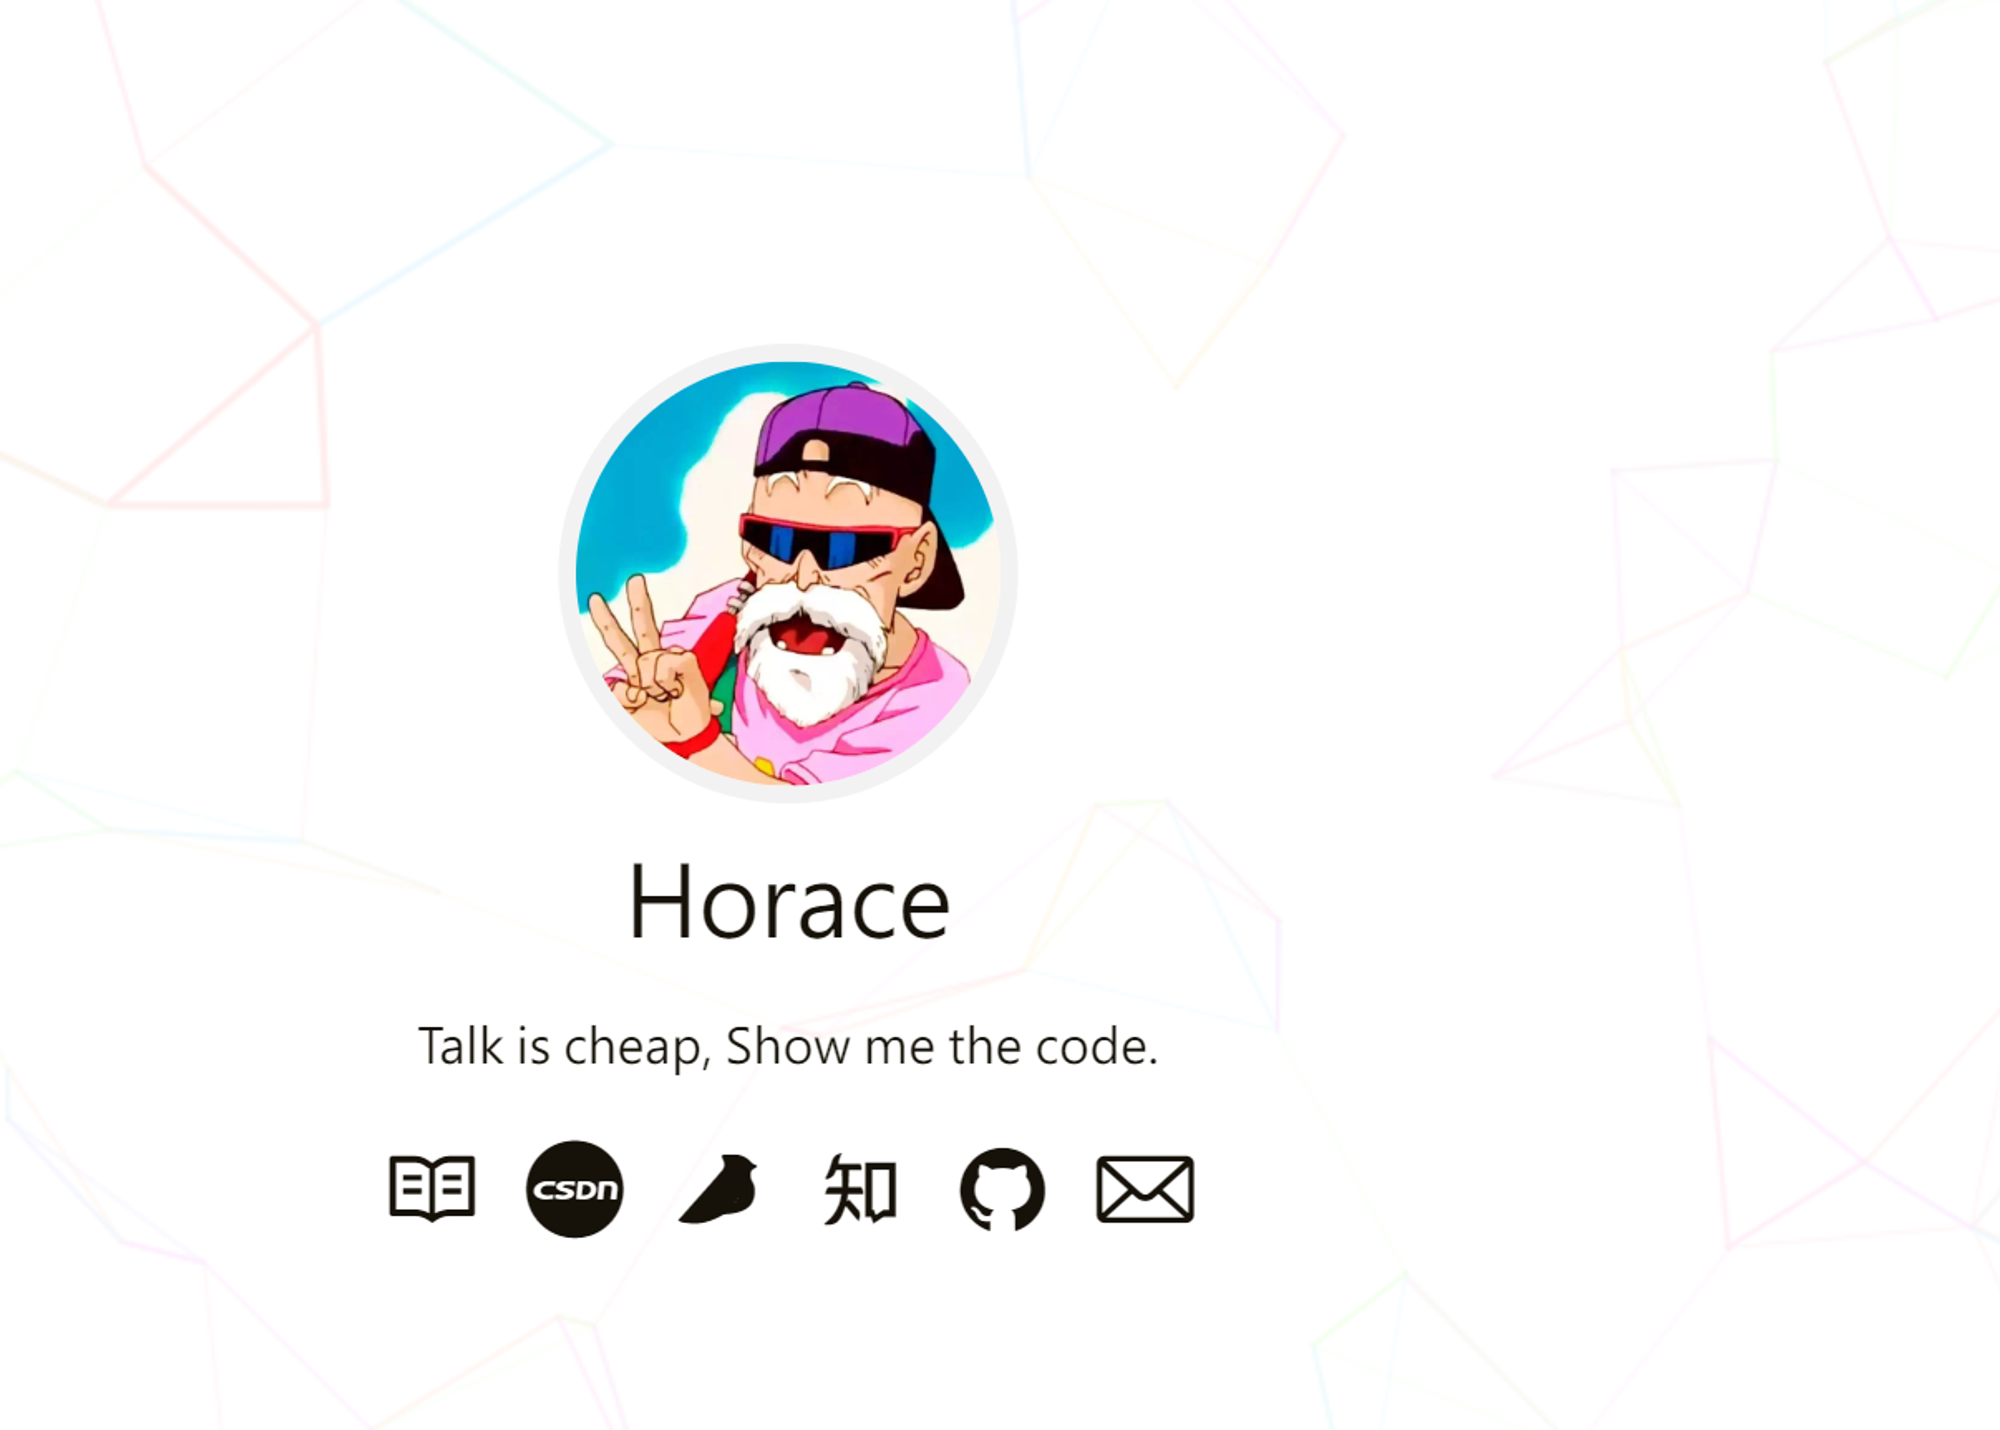 Horace’s Blog